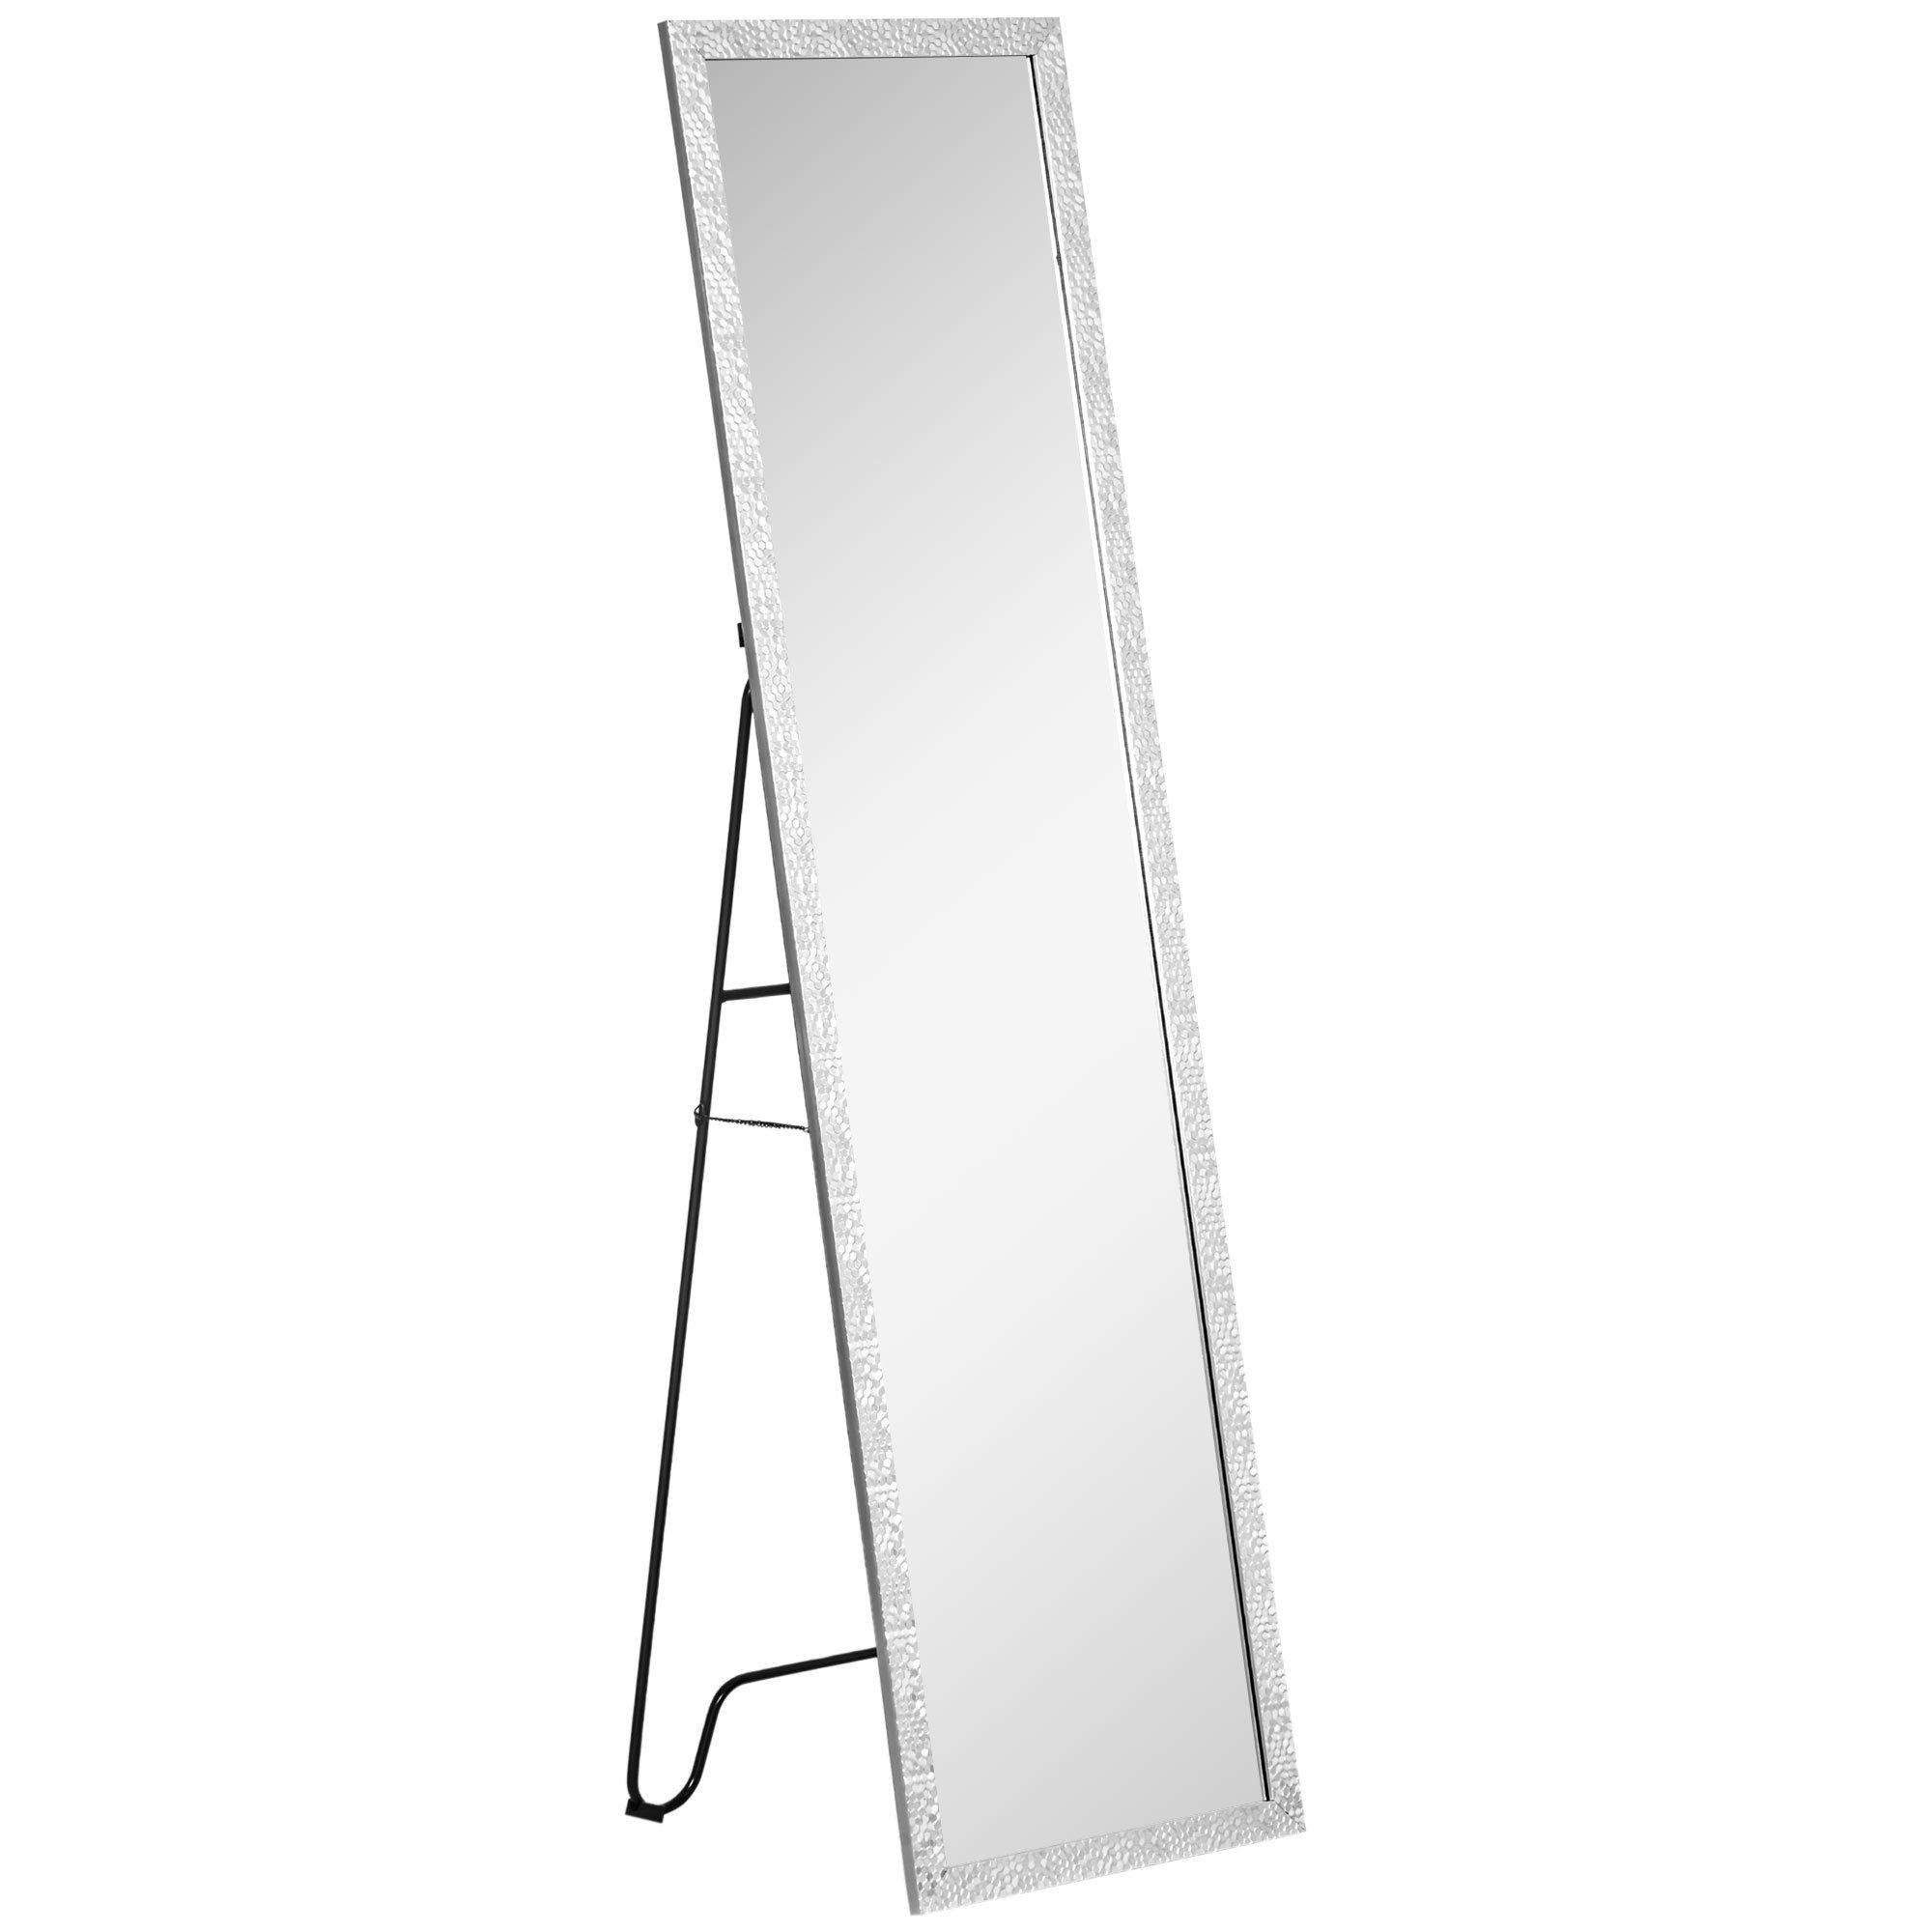 Full Length Mirror Free Standing Dressing Mirror for Bedroom